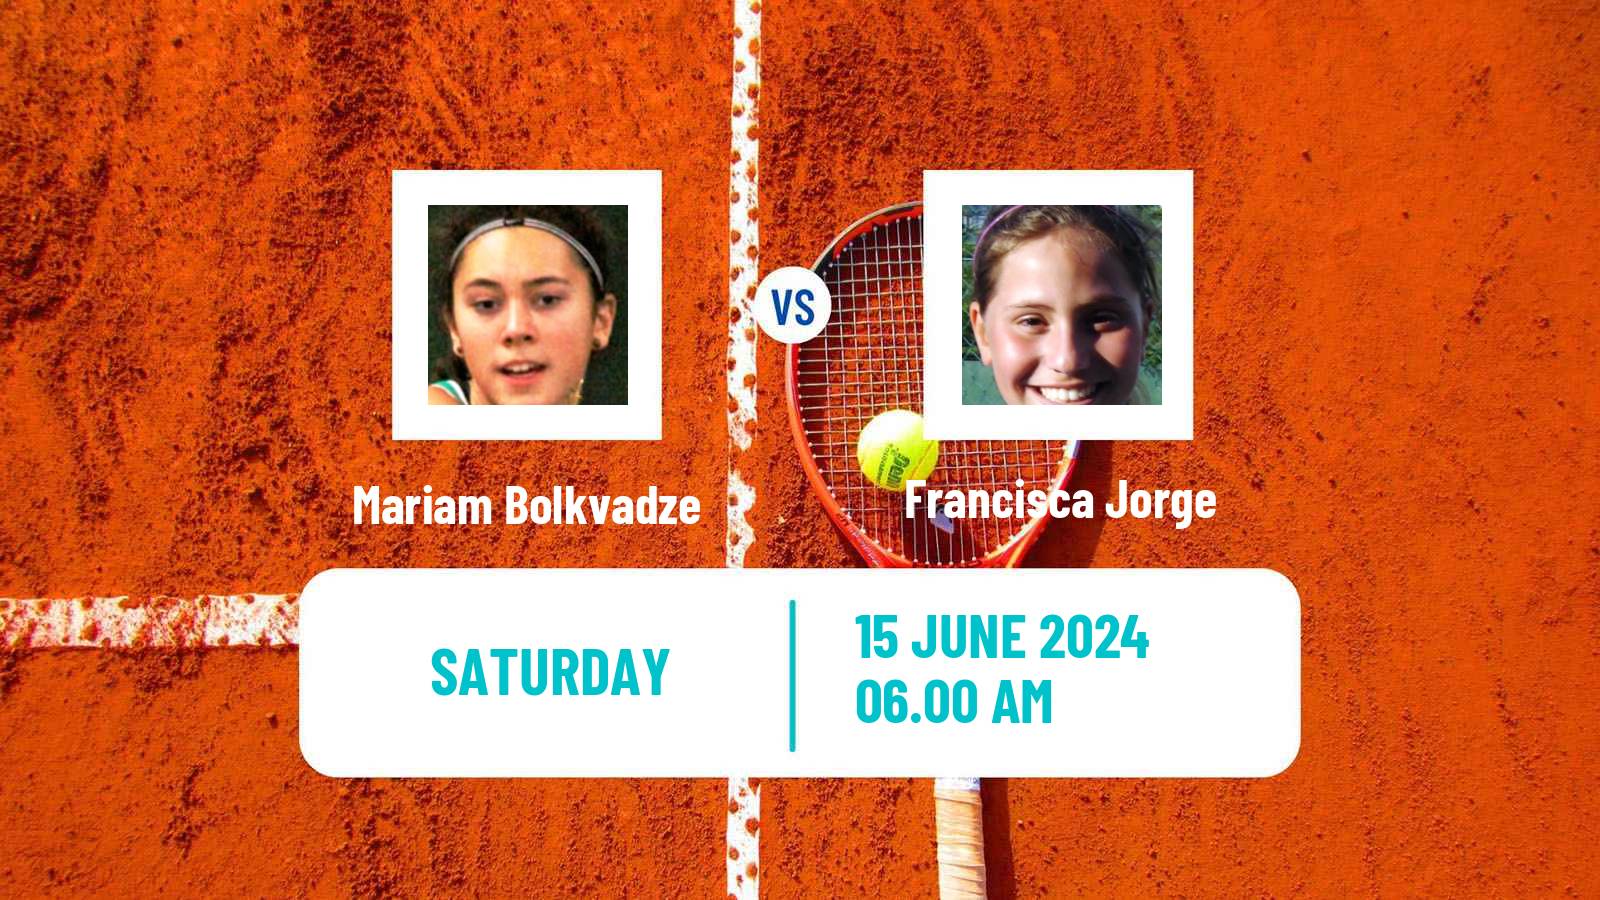 Tennis ITF W75 Guimaraes Women Mariam Bolkvadze - Francisca Jorge